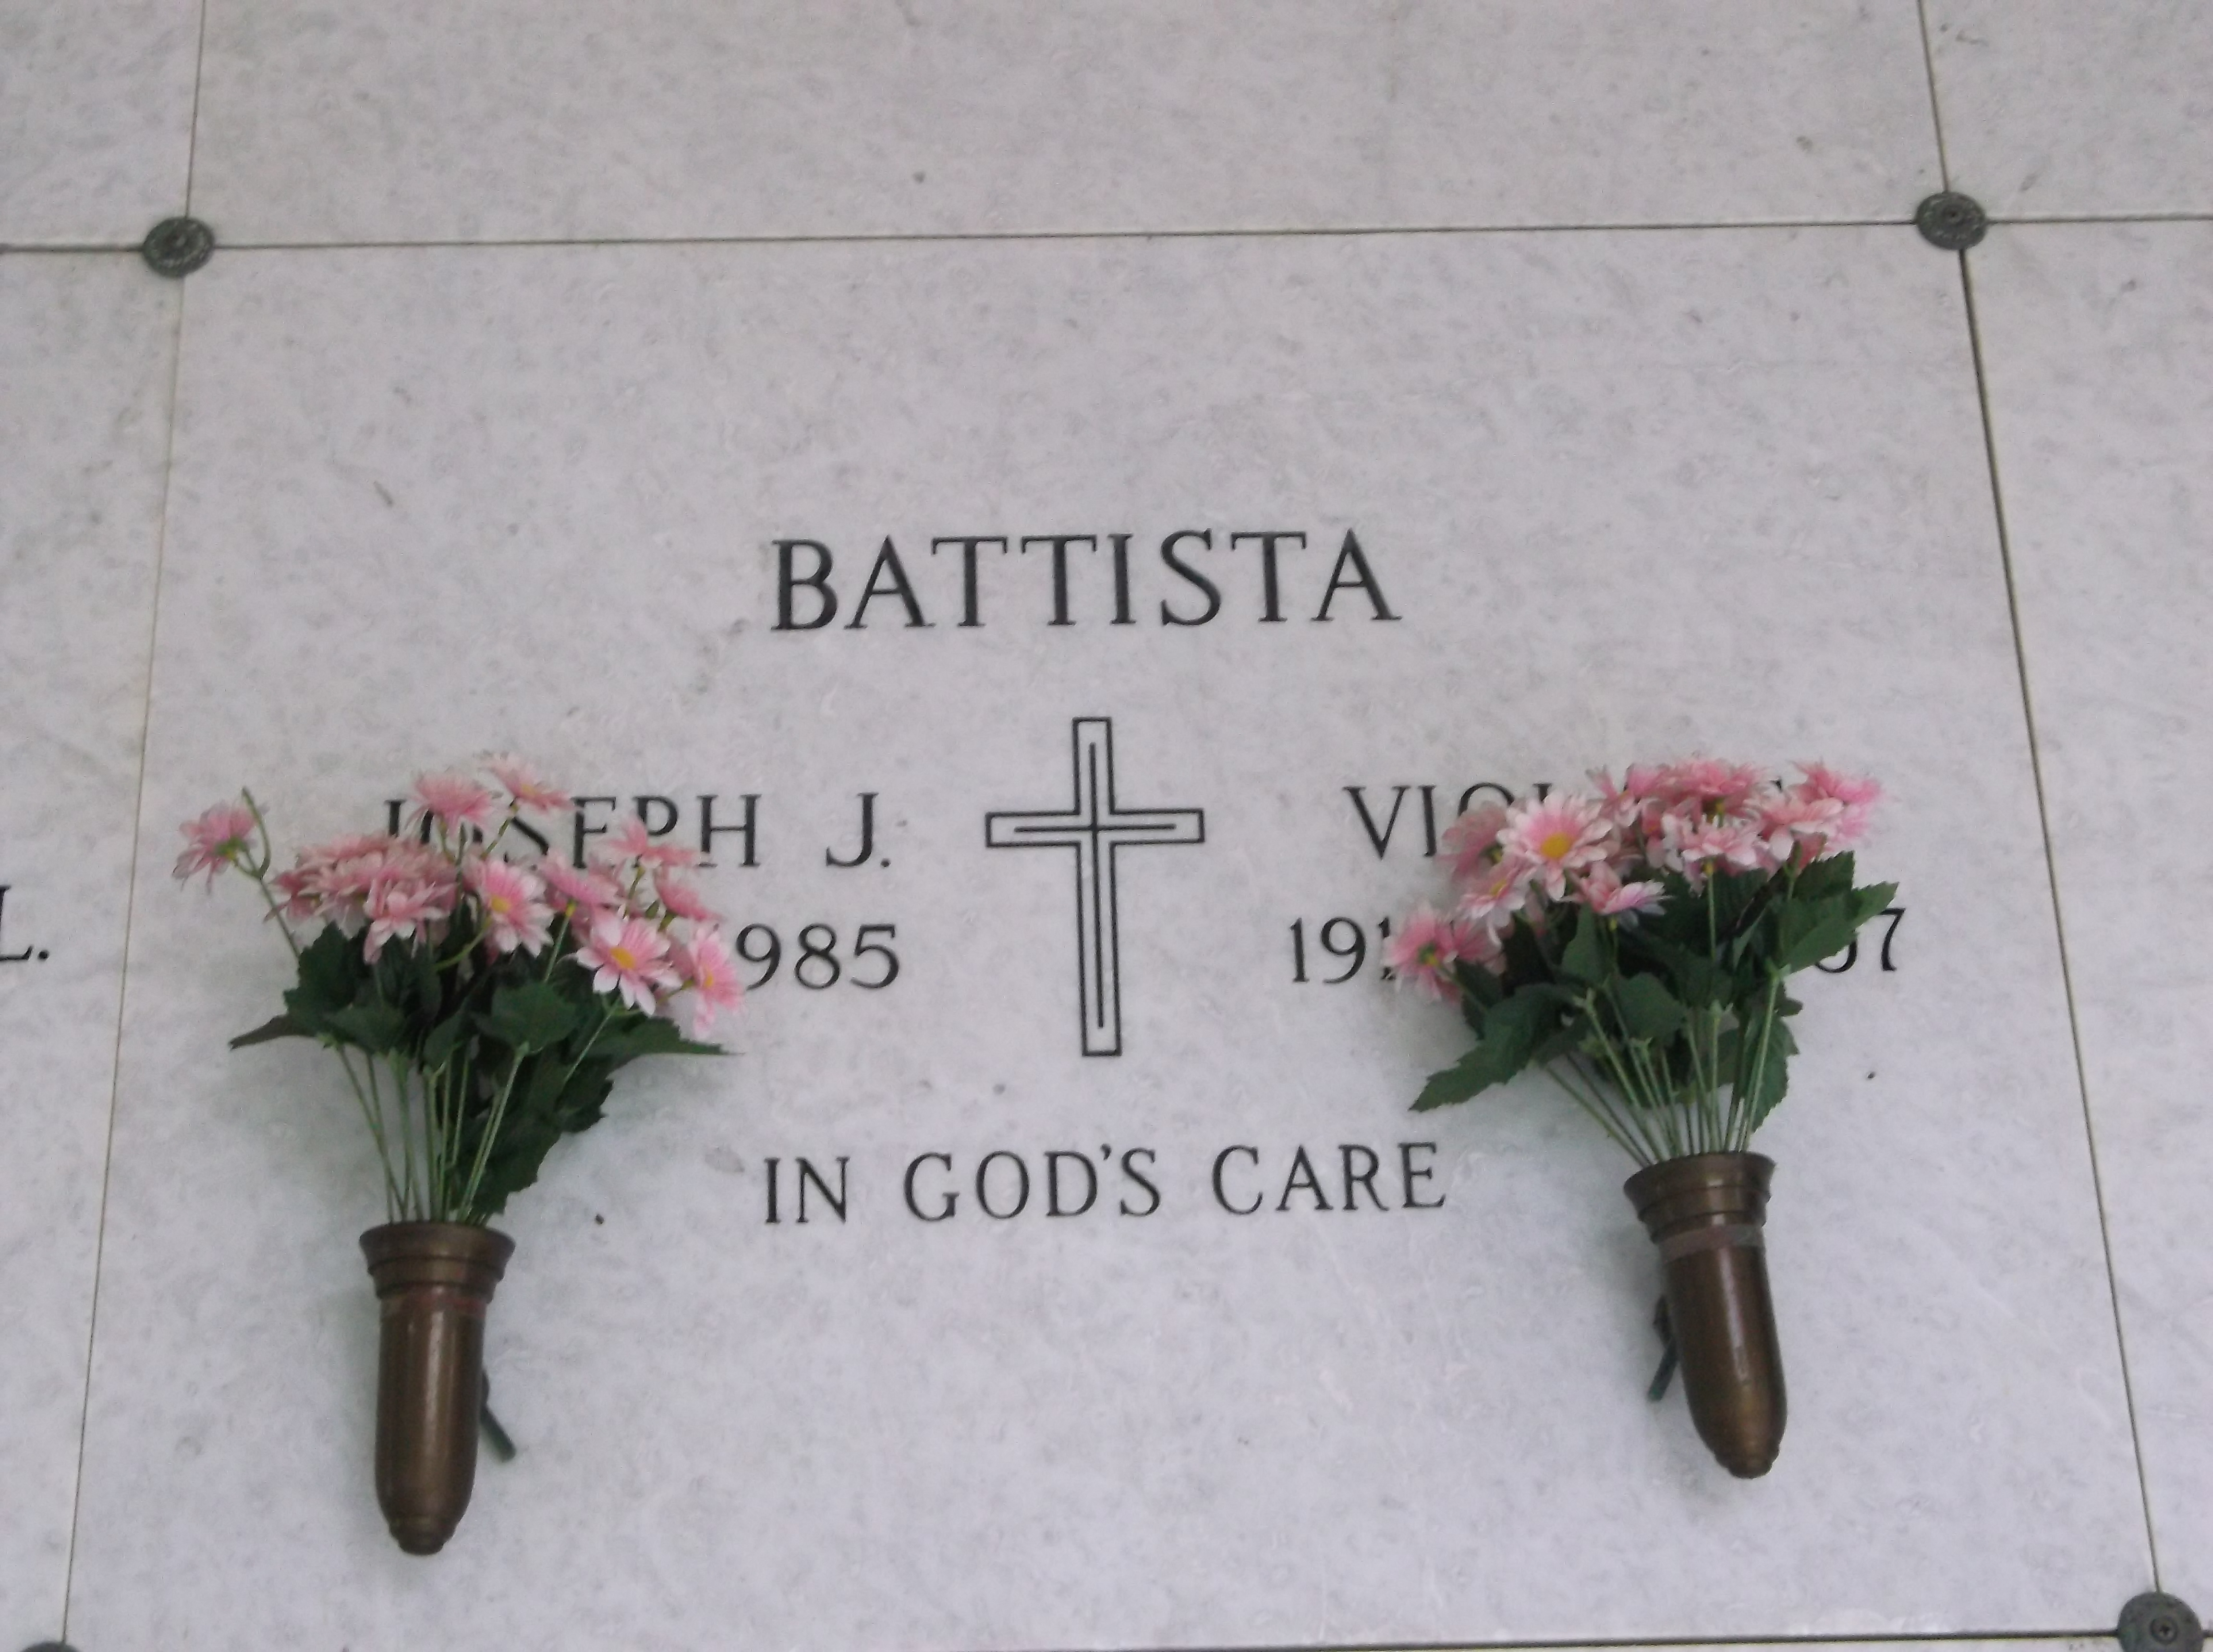 Joseph J Battista